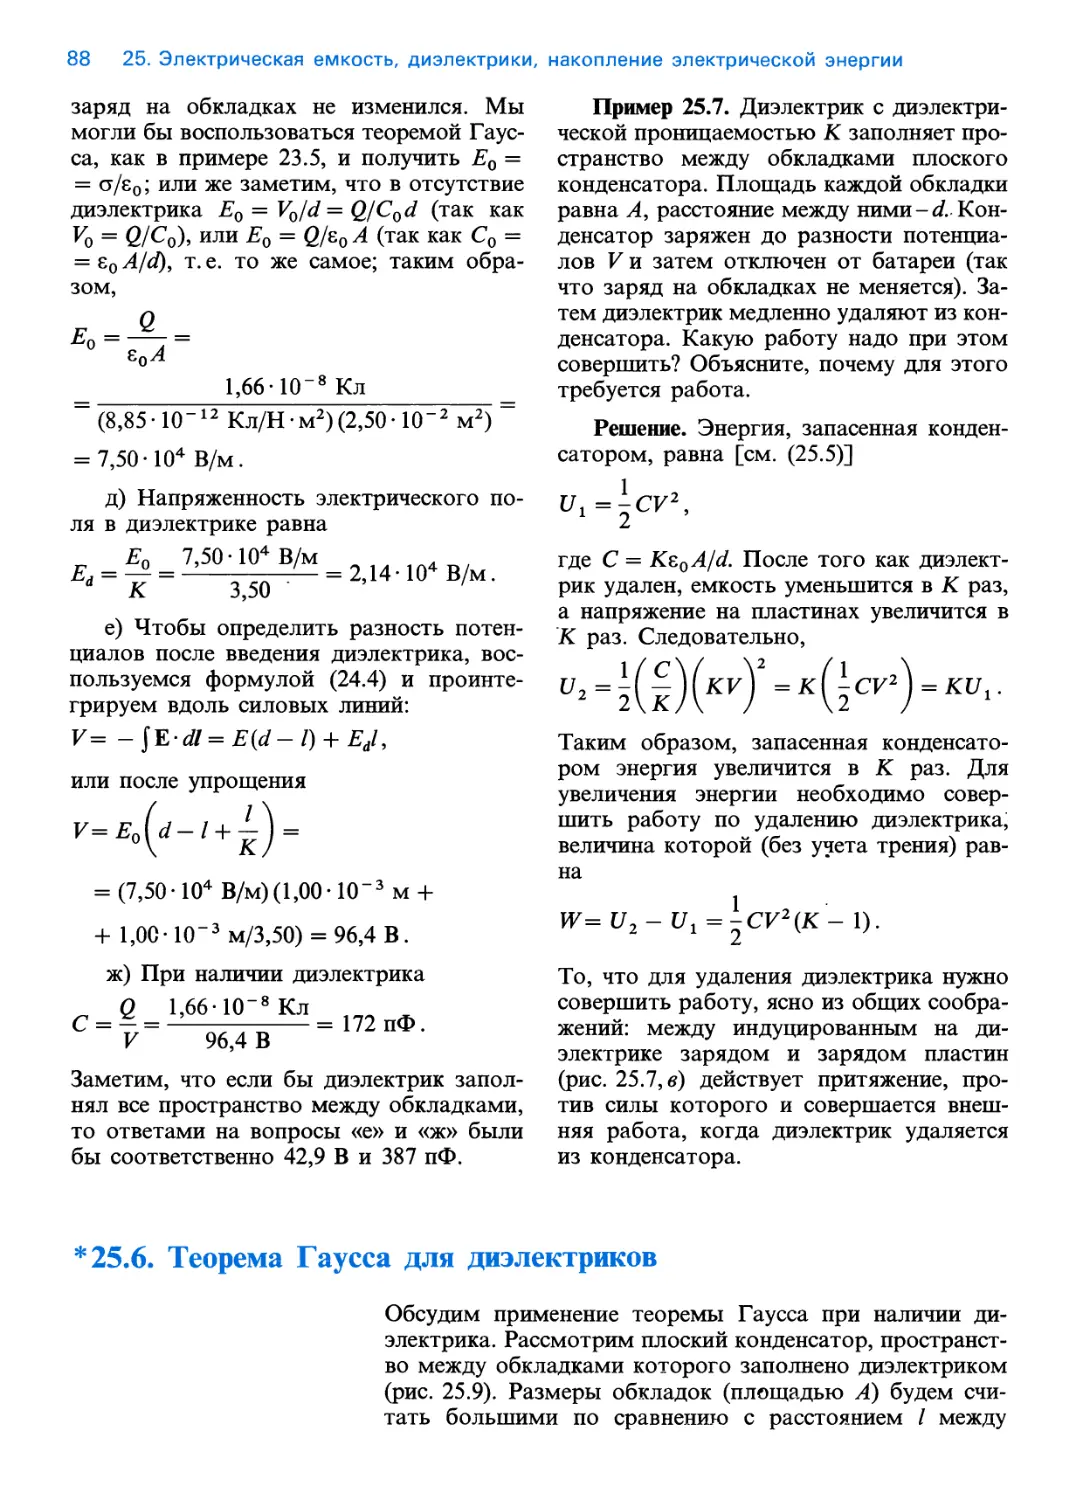 *25.6. Теорема Гаусса для диэлектриков